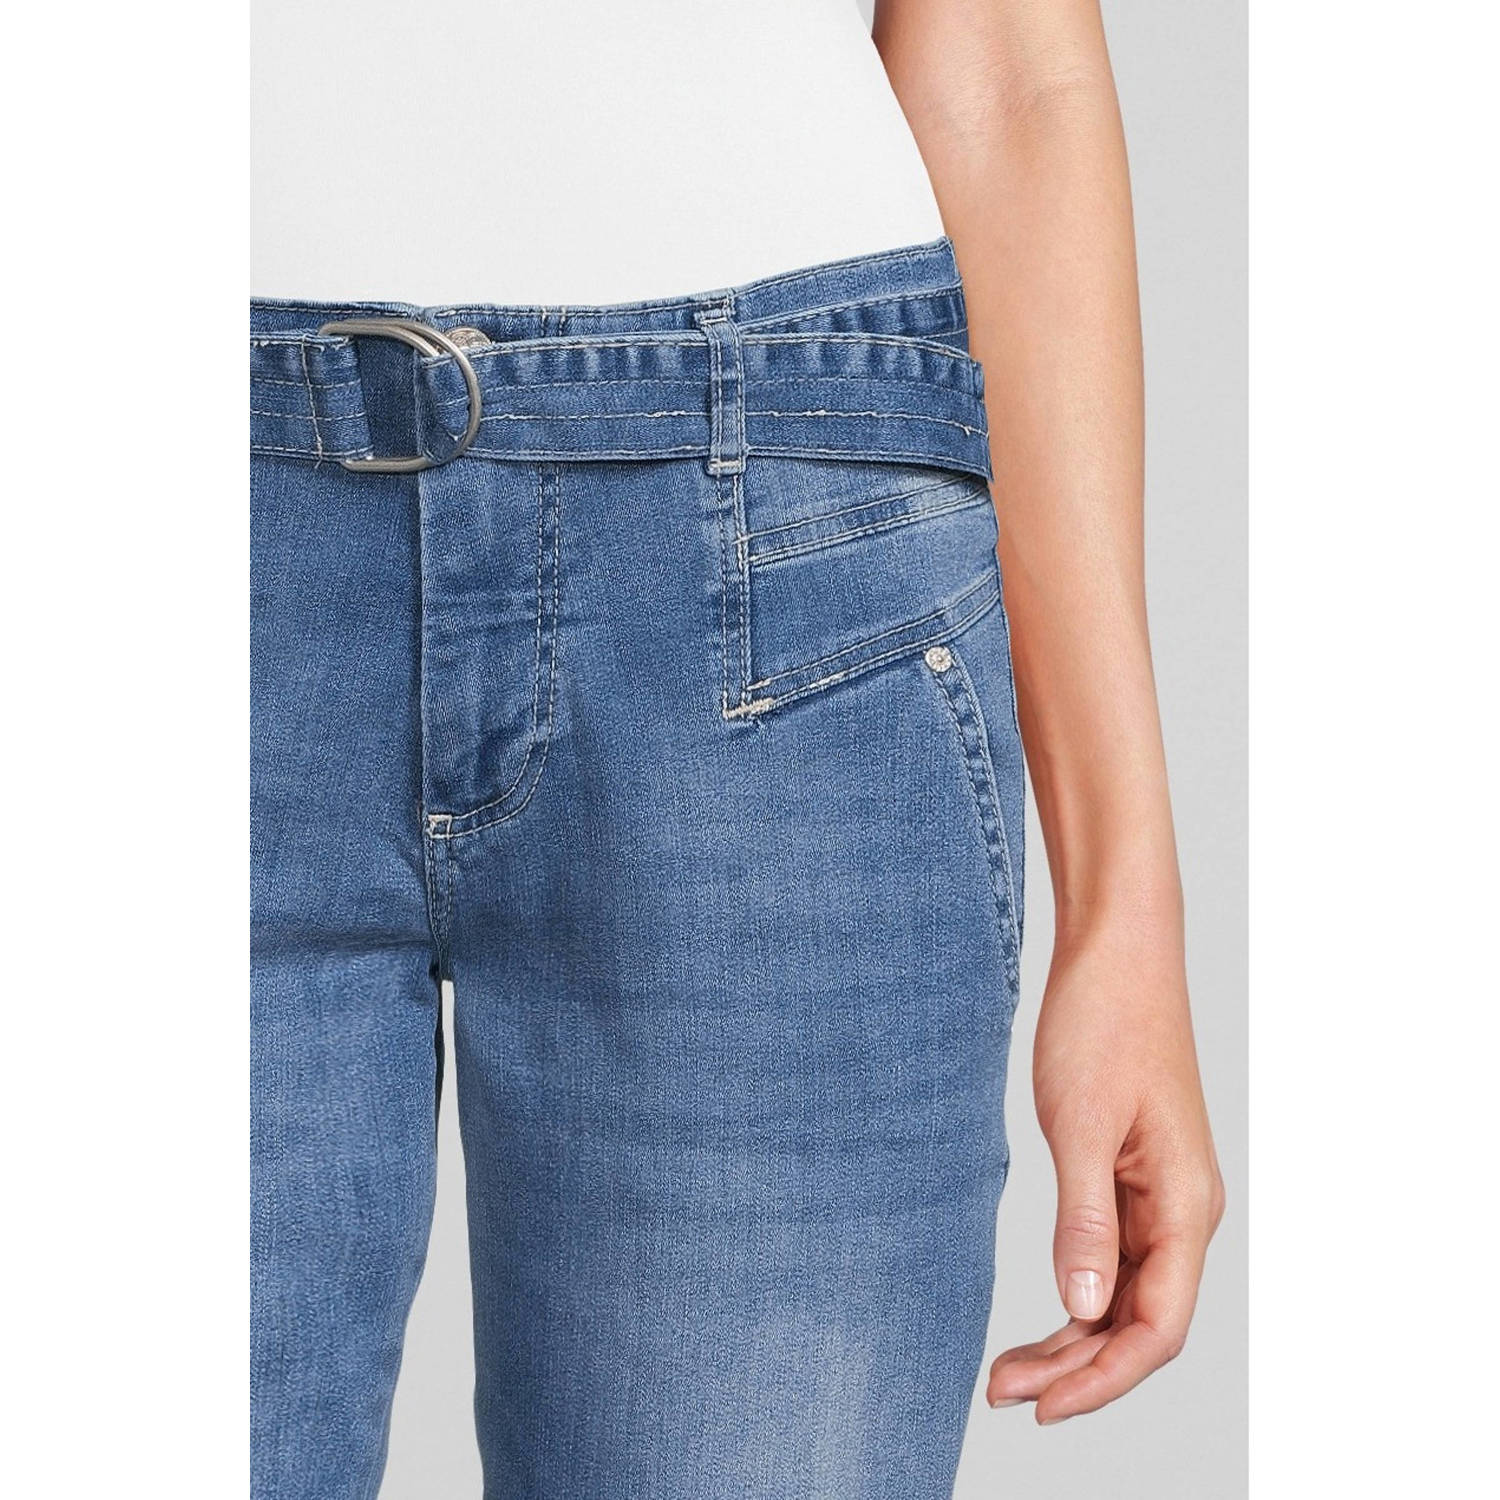 Para Mi regular jeans Bowie belt medium blue denim